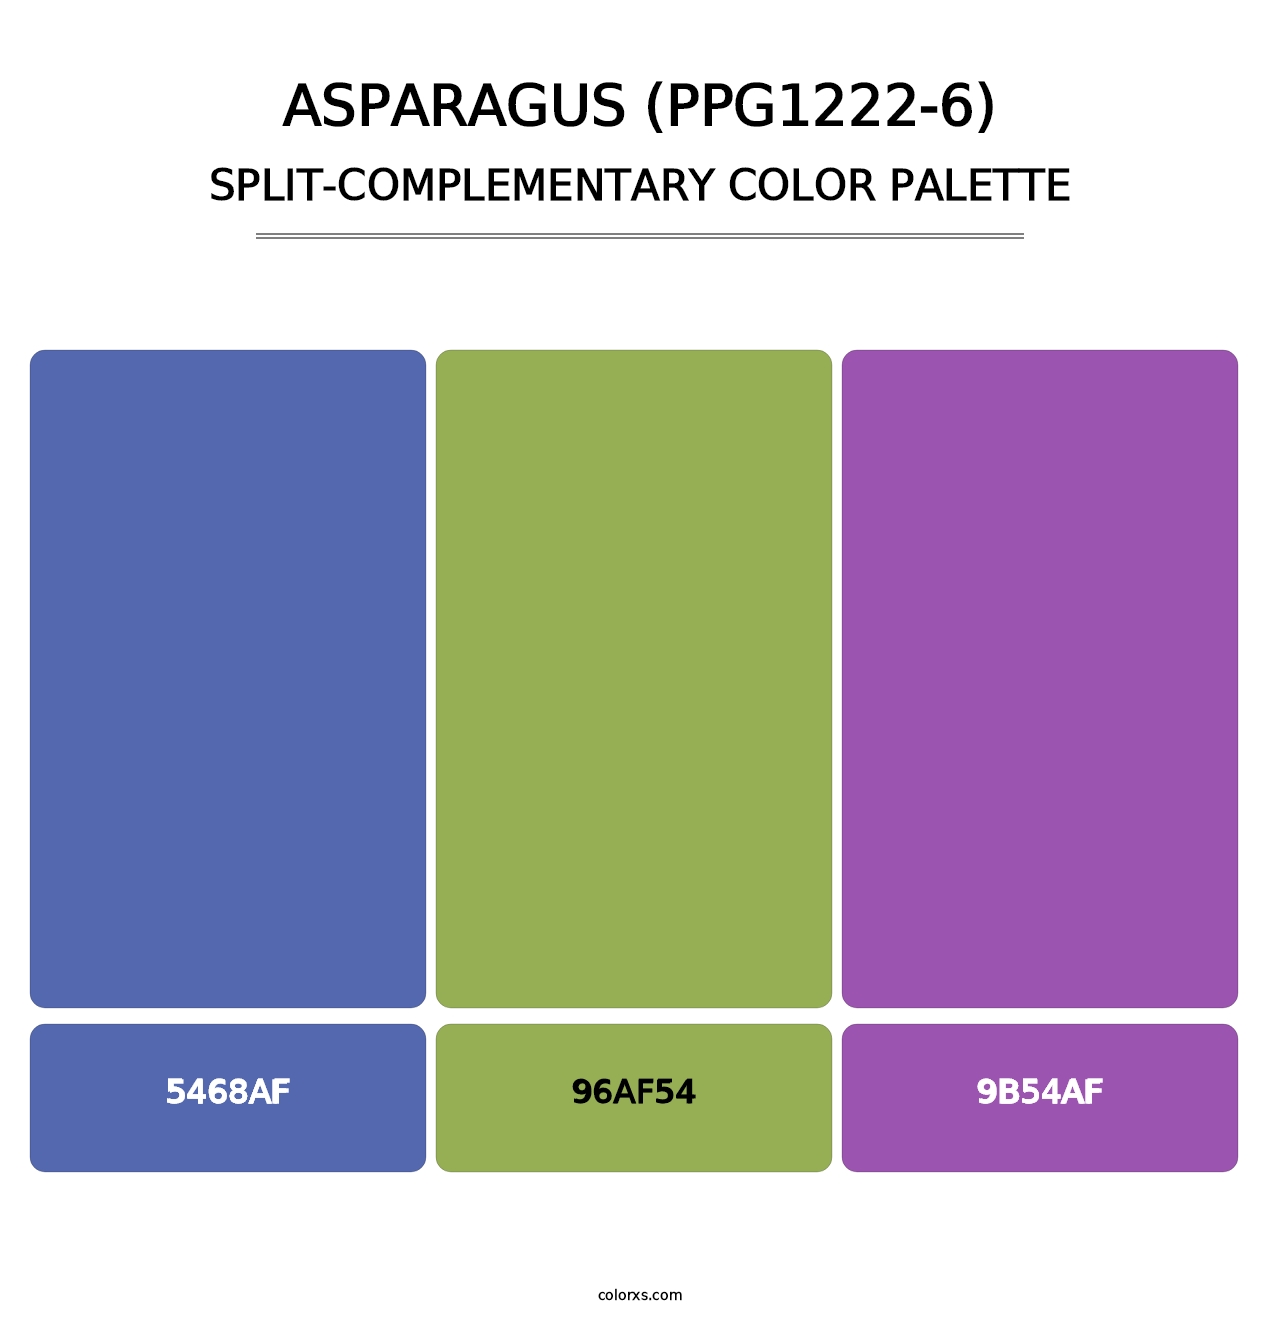 Asparagus (PPG1222-6) - Split-Complementary Color Palette